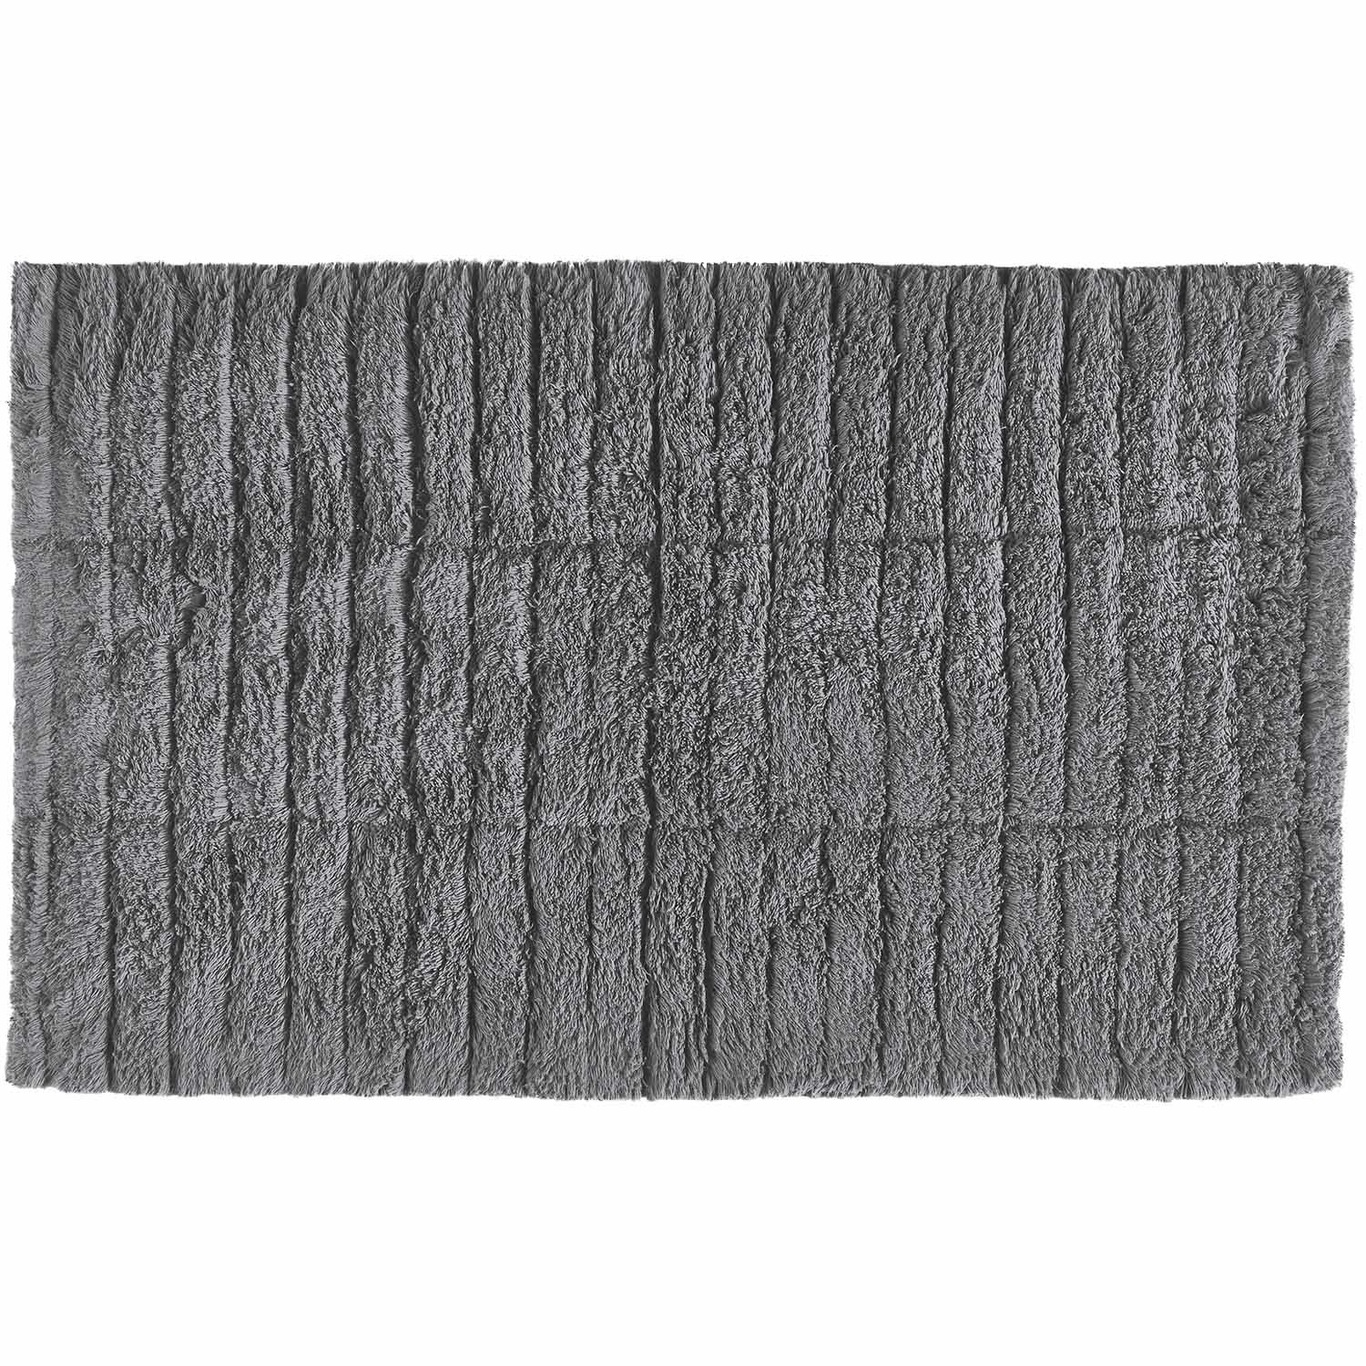 Tiles Bathroom Rug 50x80 cm, Grey